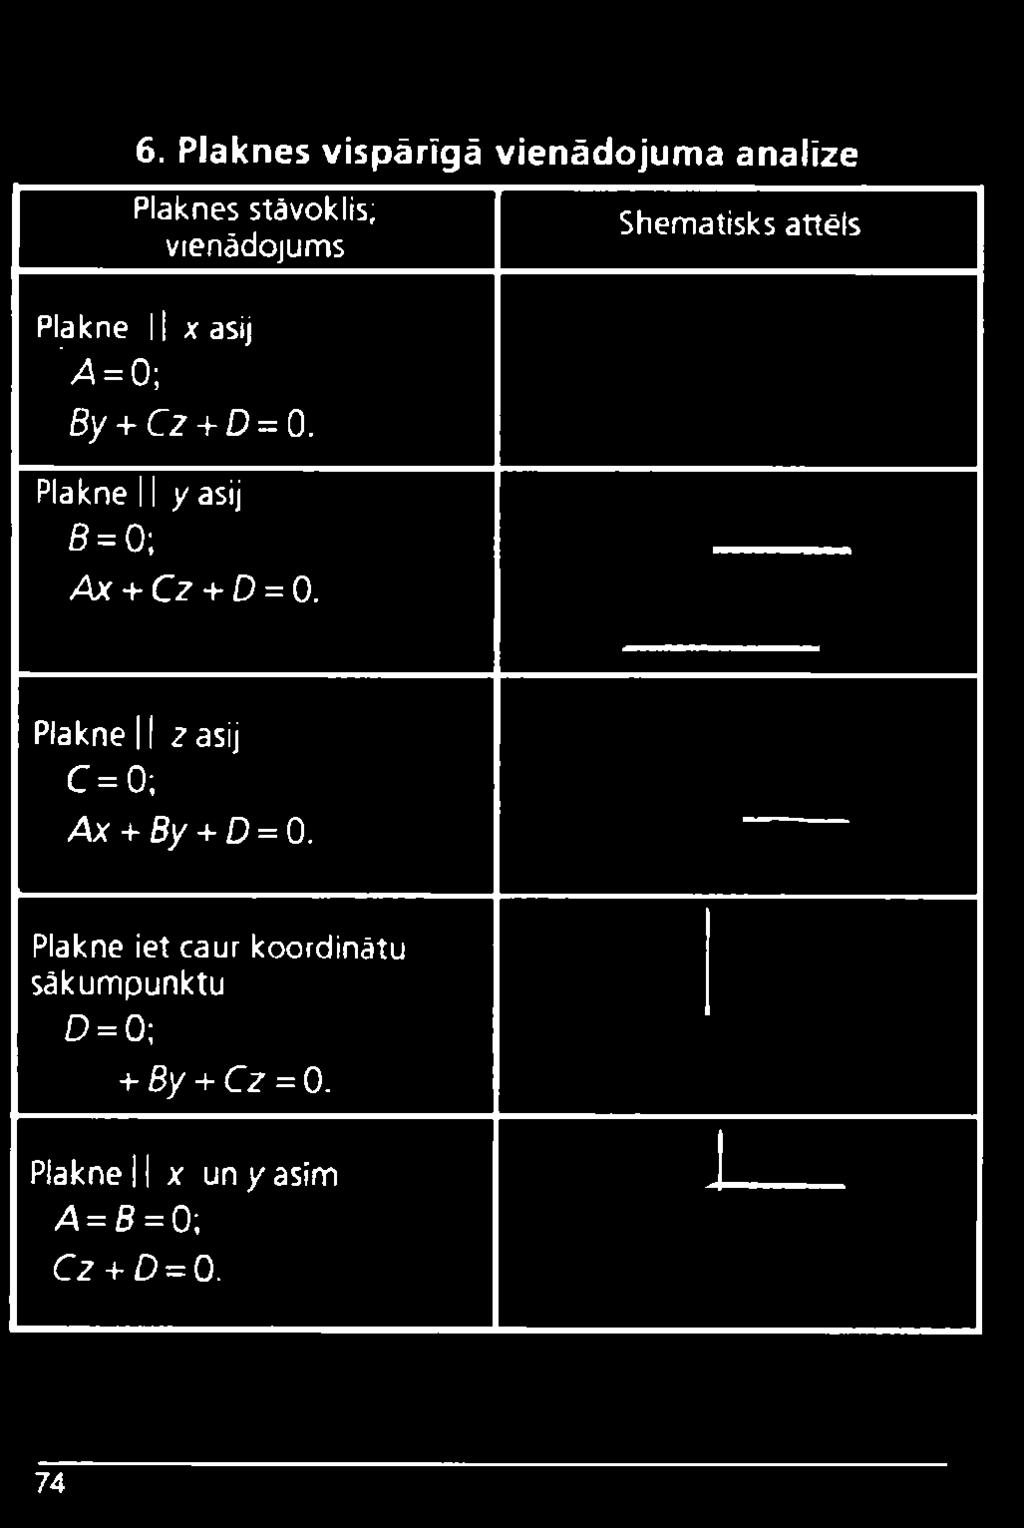 Plakne 1 y asij 6 = 0; Ax + Cz + D = 0. Plakne 2-asij C = 0; Ax + By + D = 0.